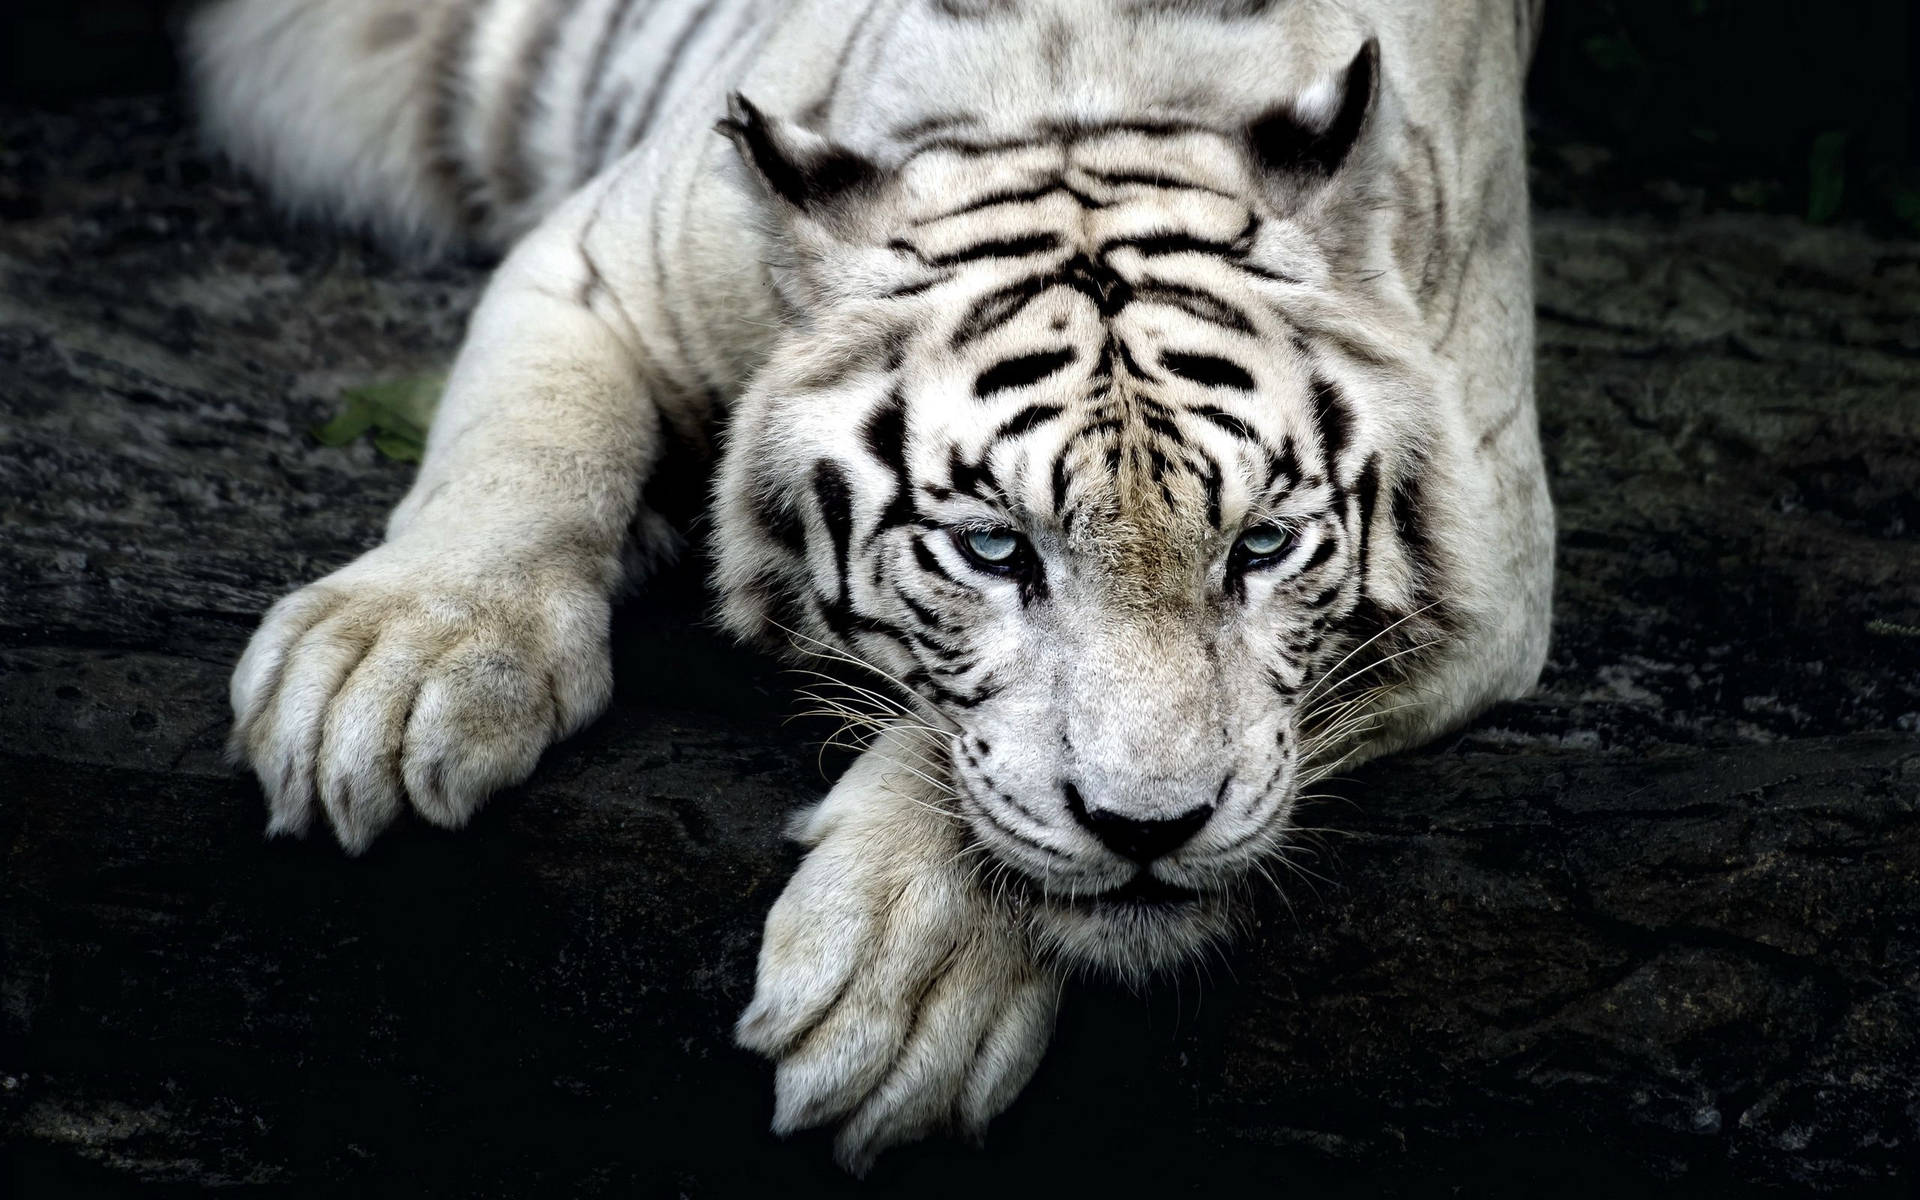 Resting Beauty - A Majestic Albino Tiger Wallpaper